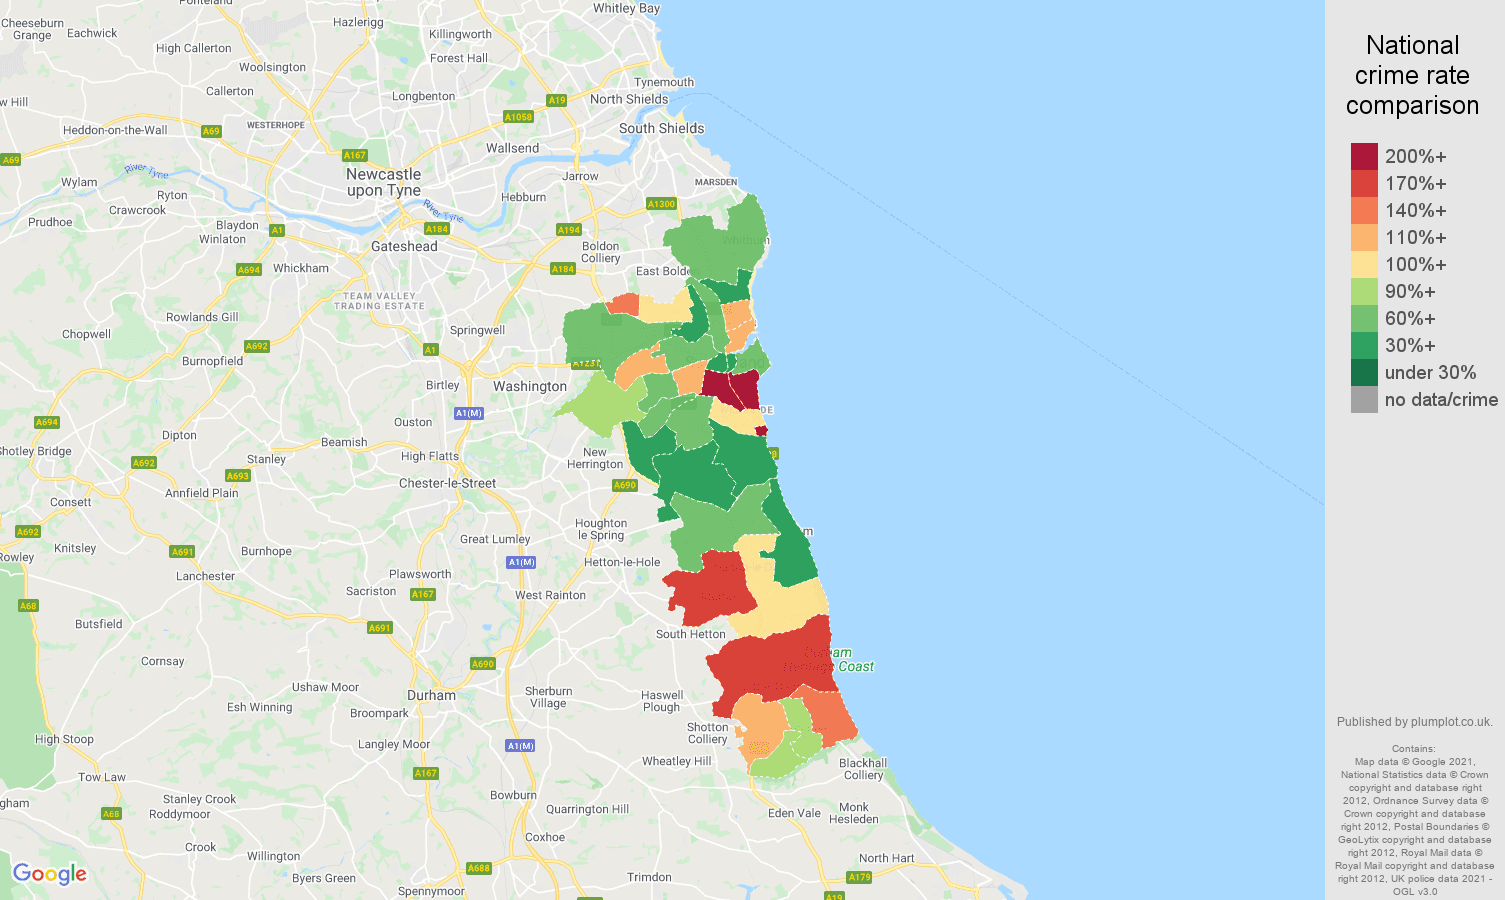 Sunderland vehicle crime rate comparison map